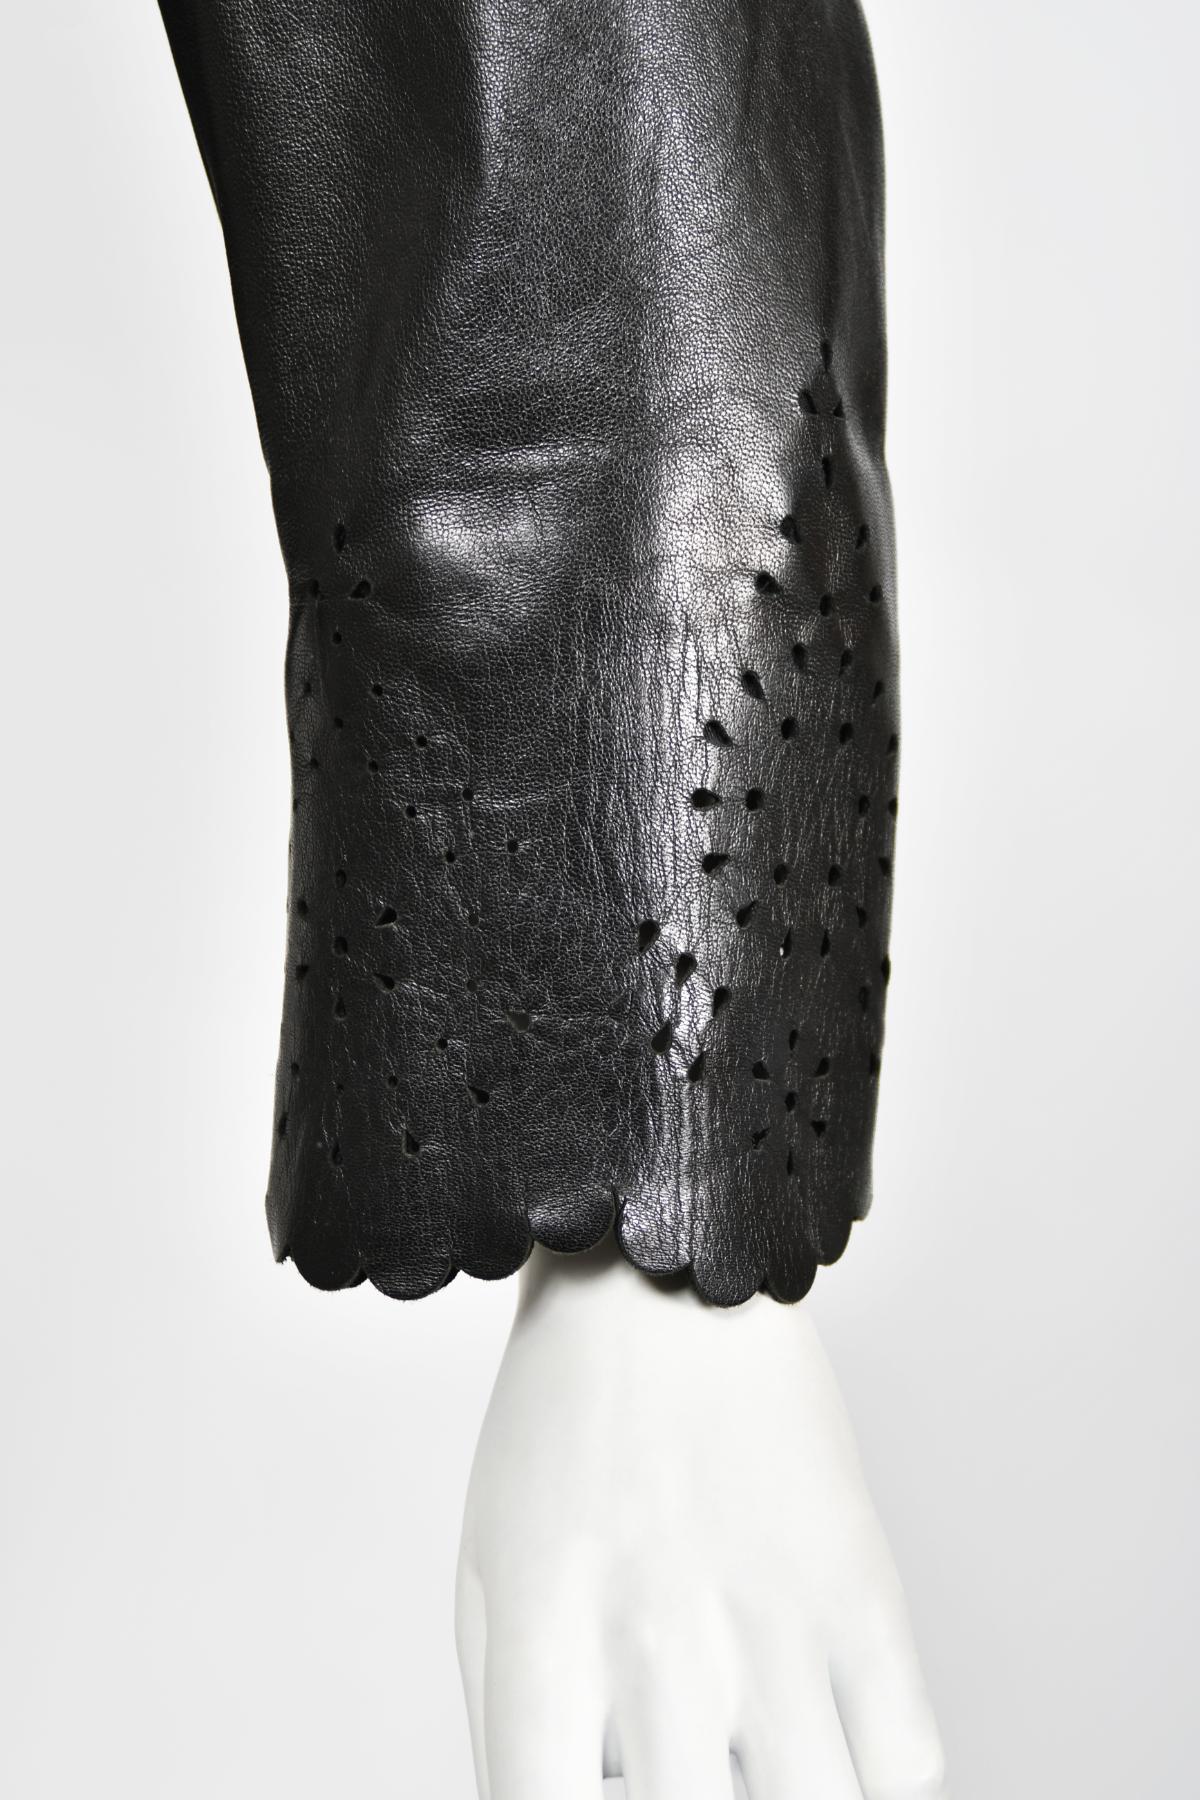 1997 Alexander Mcqueen for Givenchy Runway Black Leather Cutwork Blazer Jacket 8